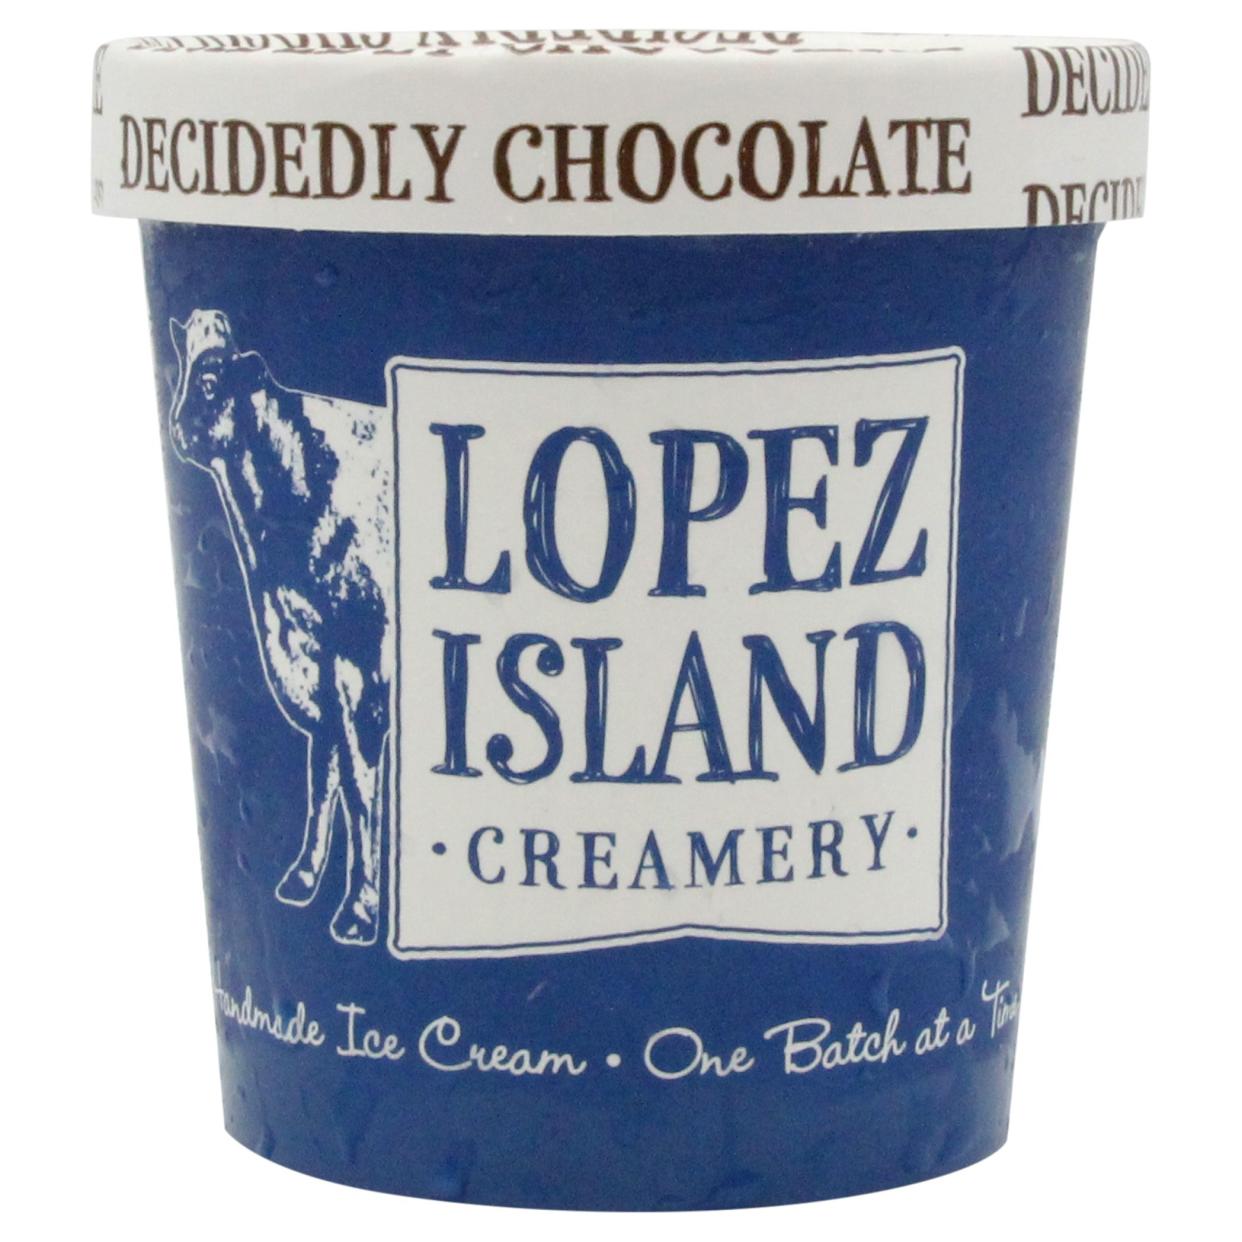 Lopez Island Decidedly Chocolate ($5.99 / per pint)